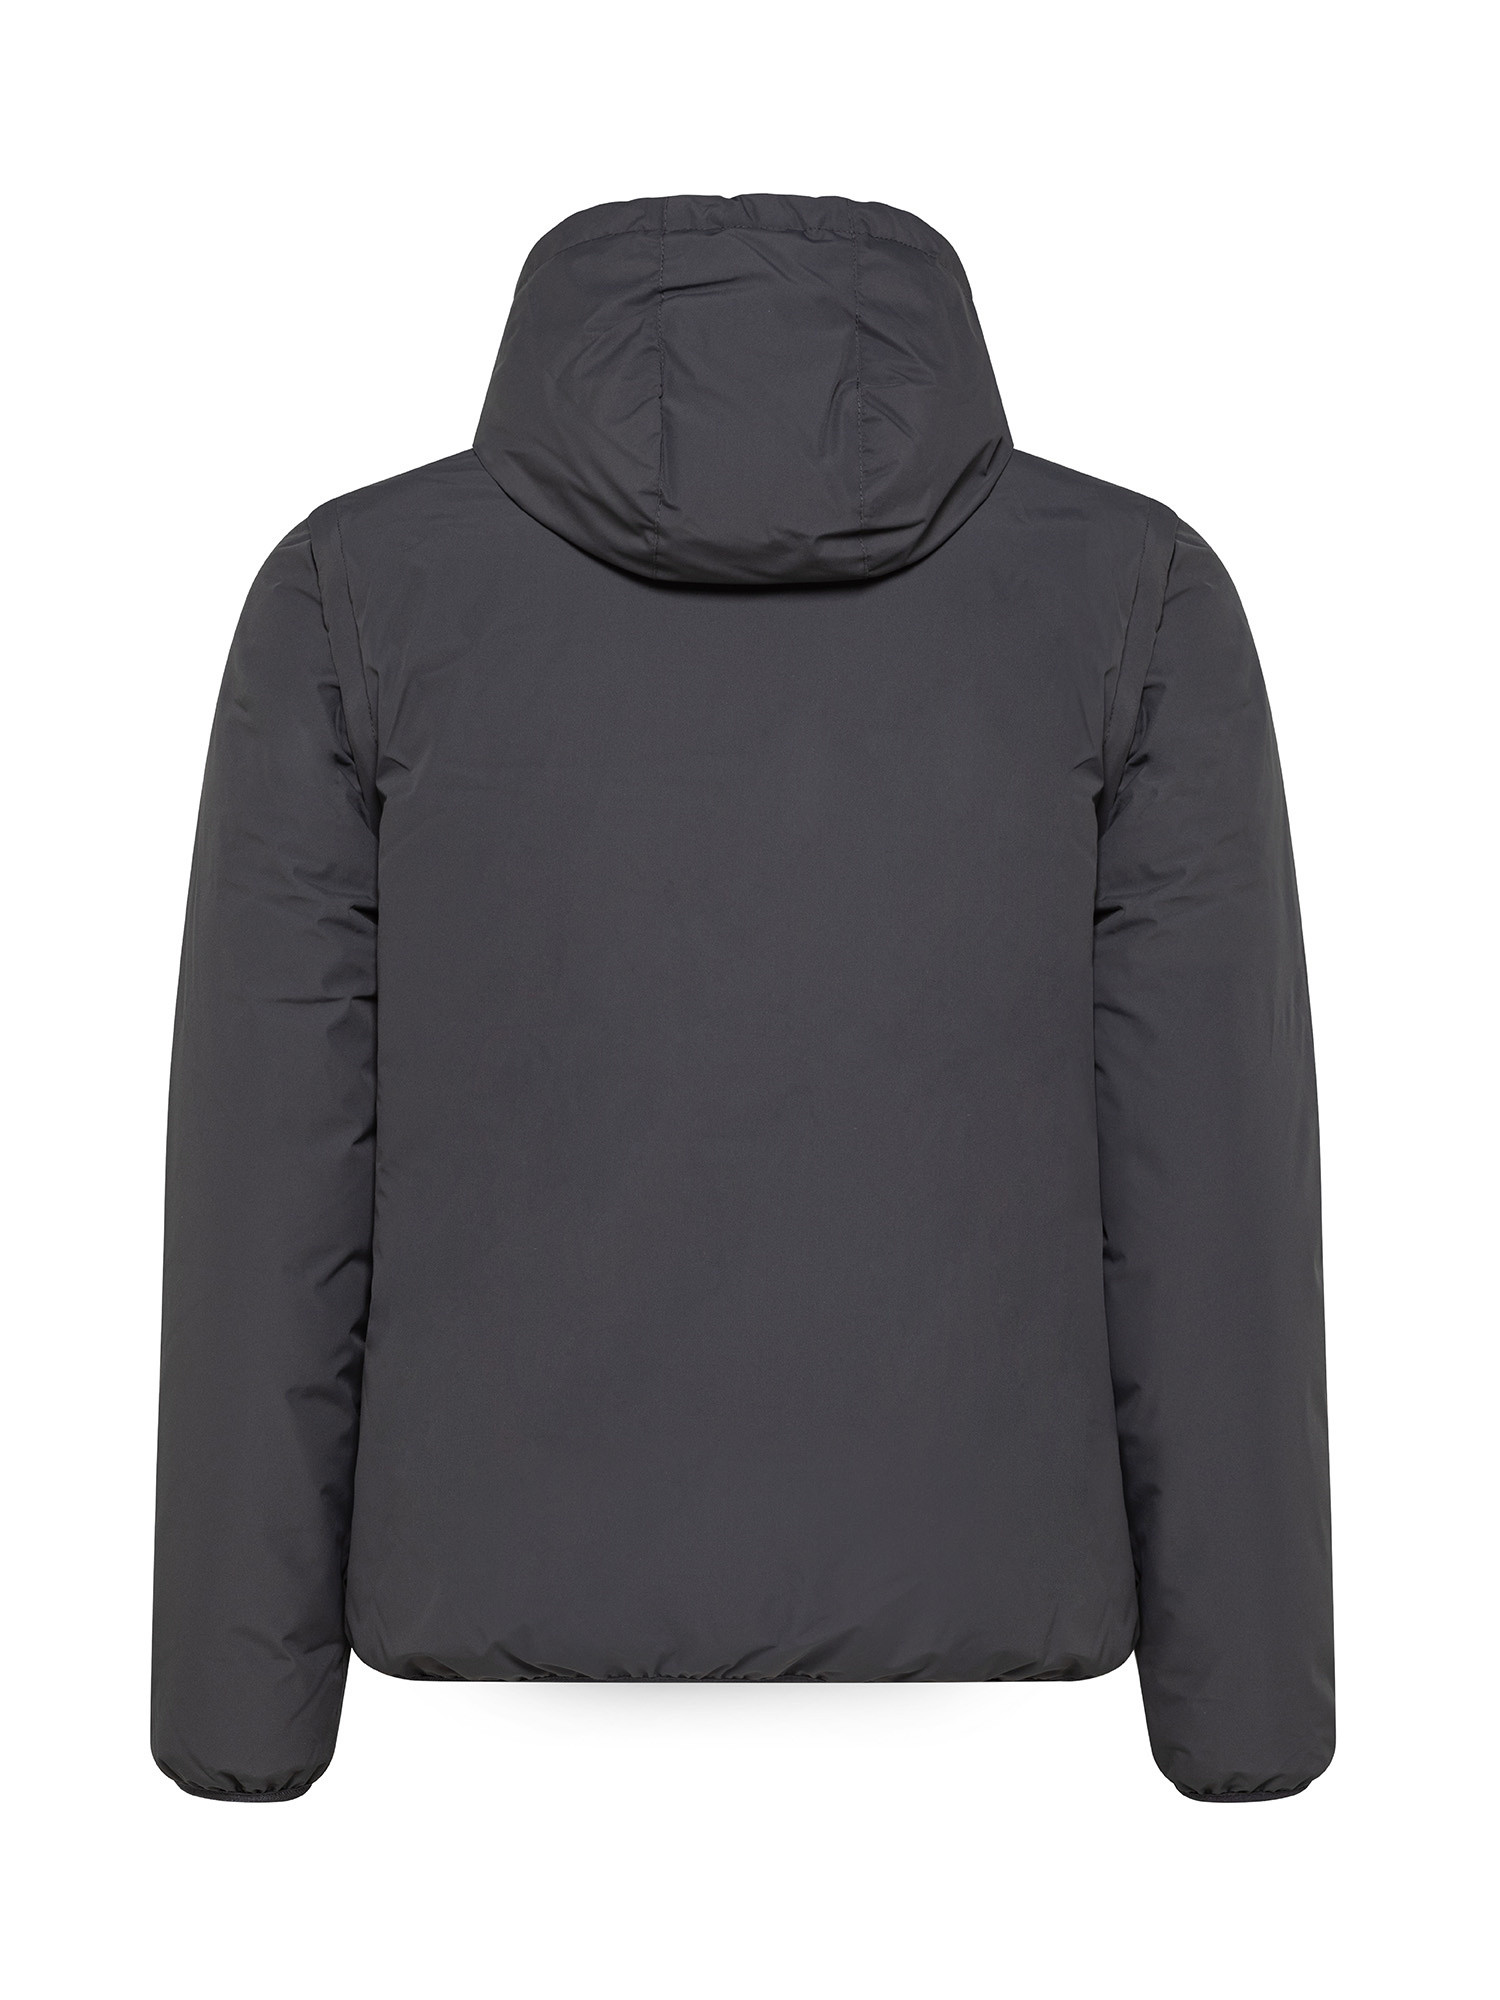 Ciesse Piumini - Reversible down jacket with hood, Black, large image number 1